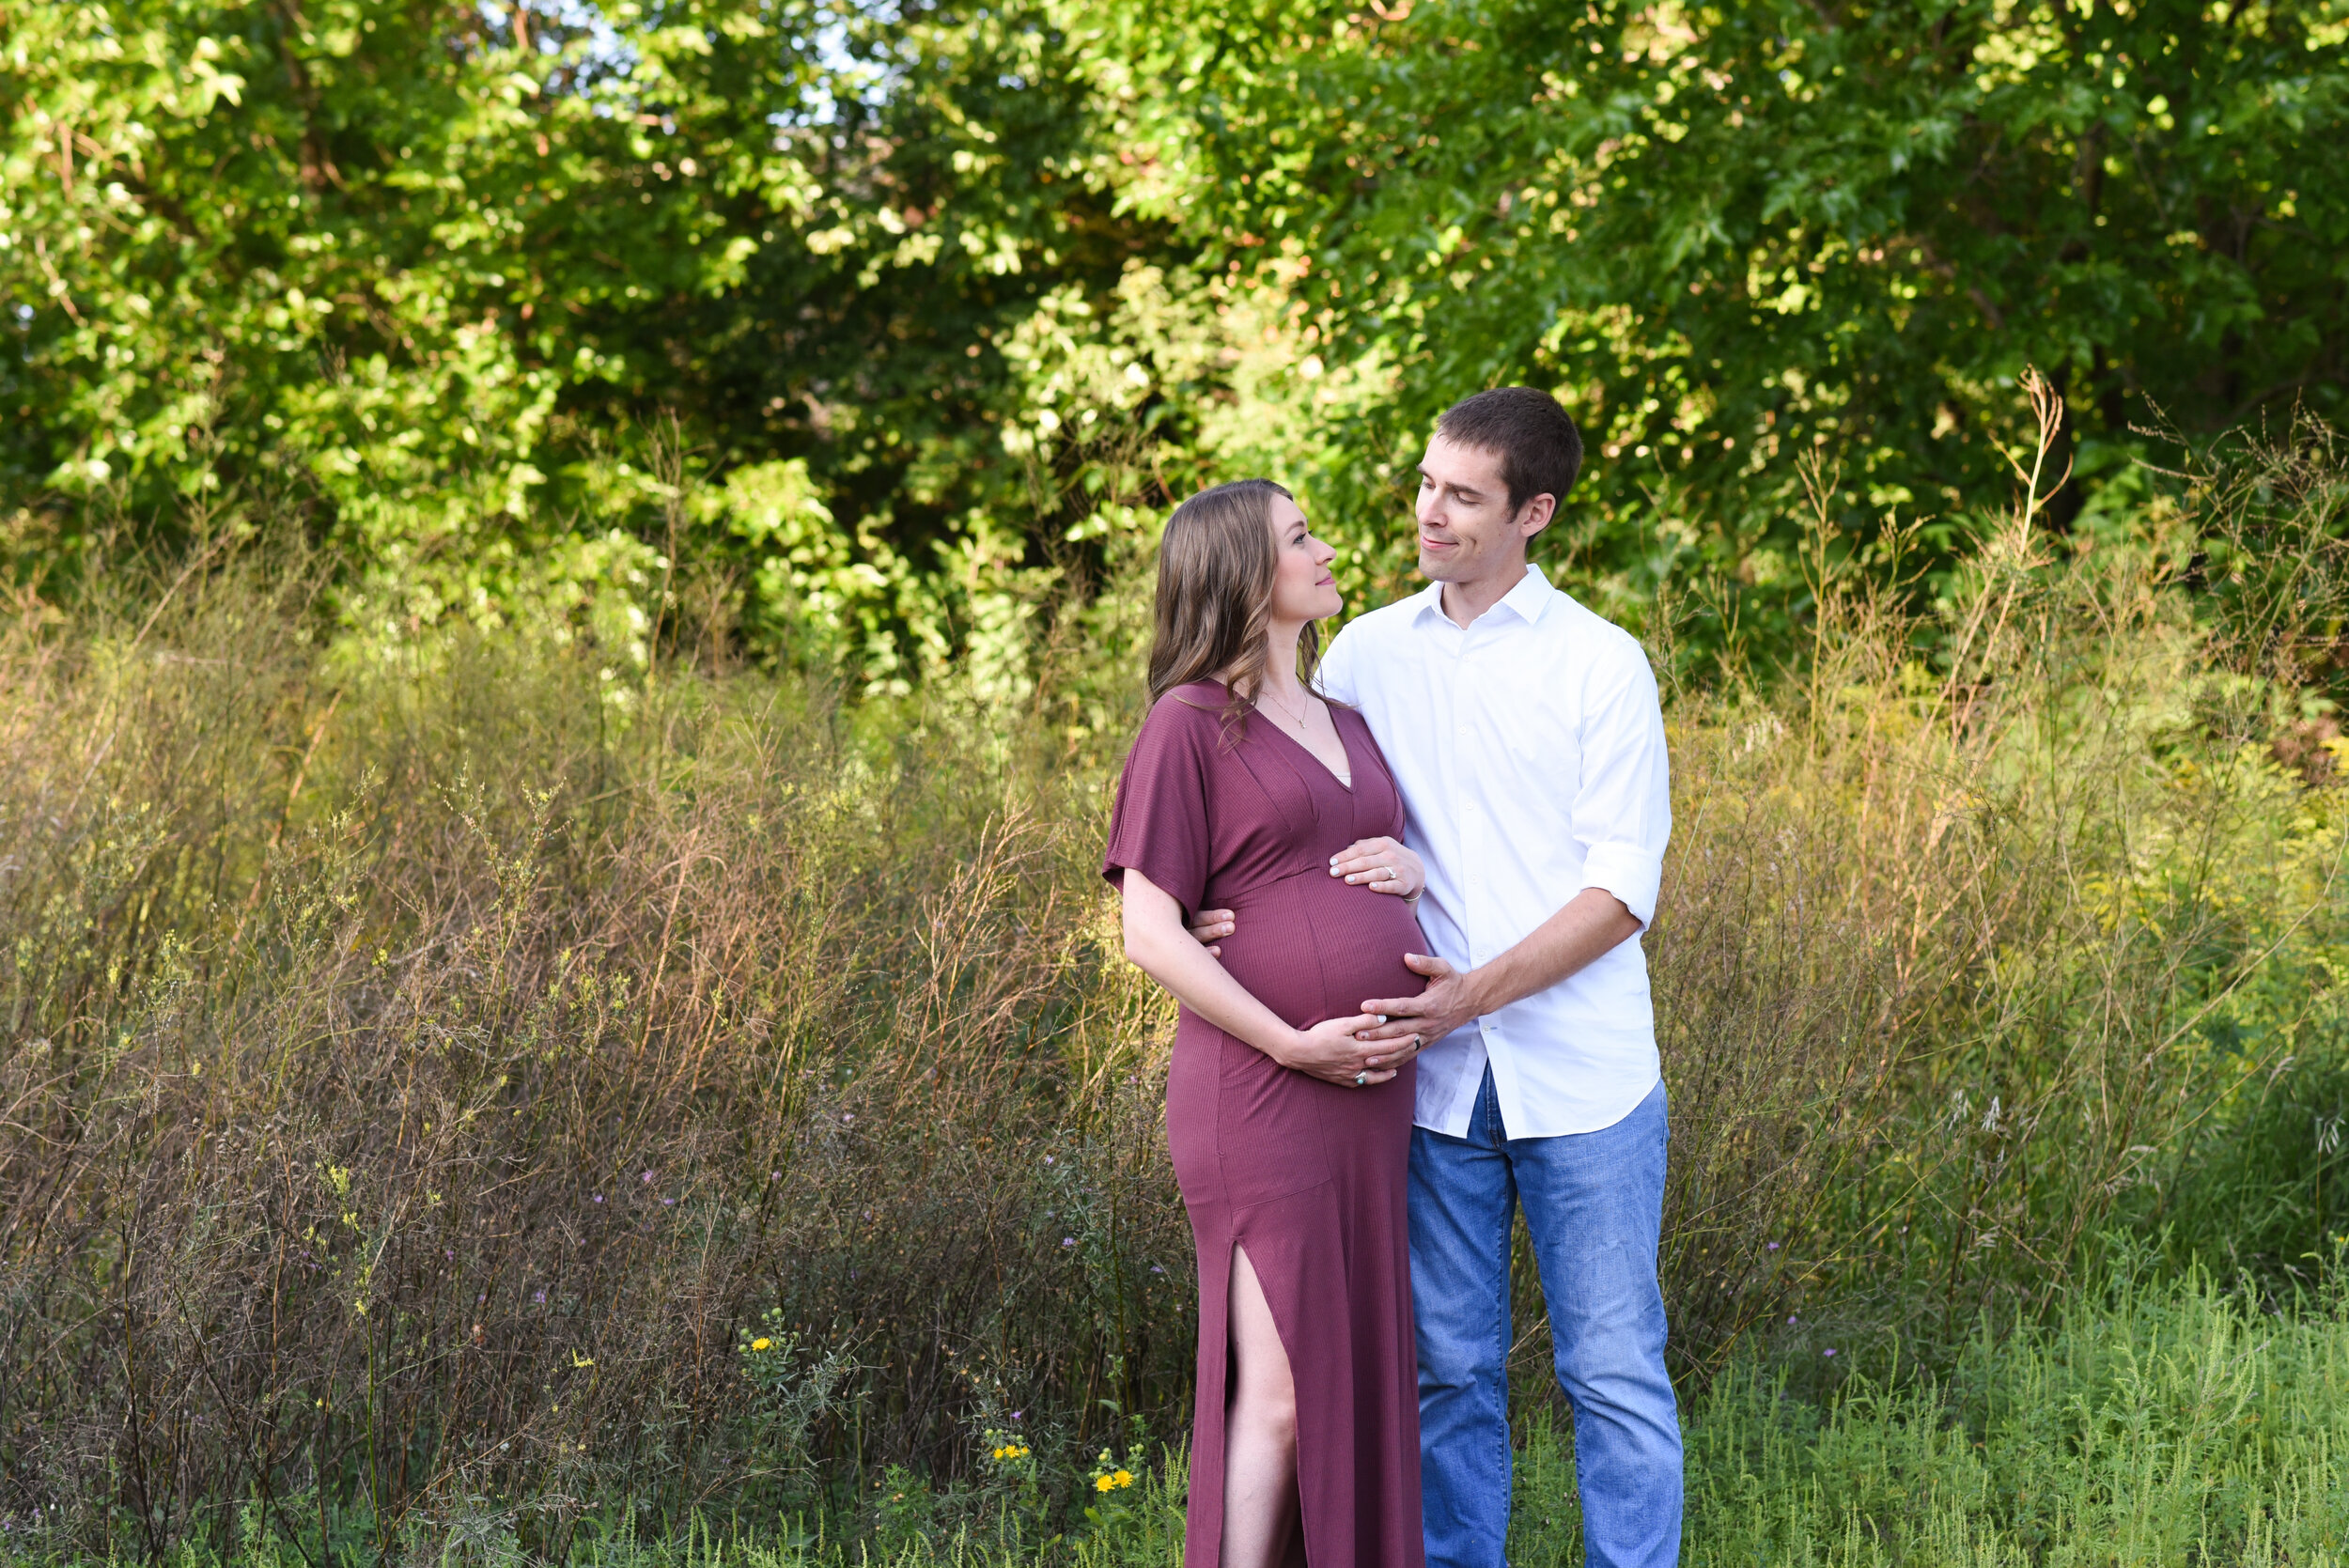 119_Sarah and Jim Portman Maternity 2019.jpg